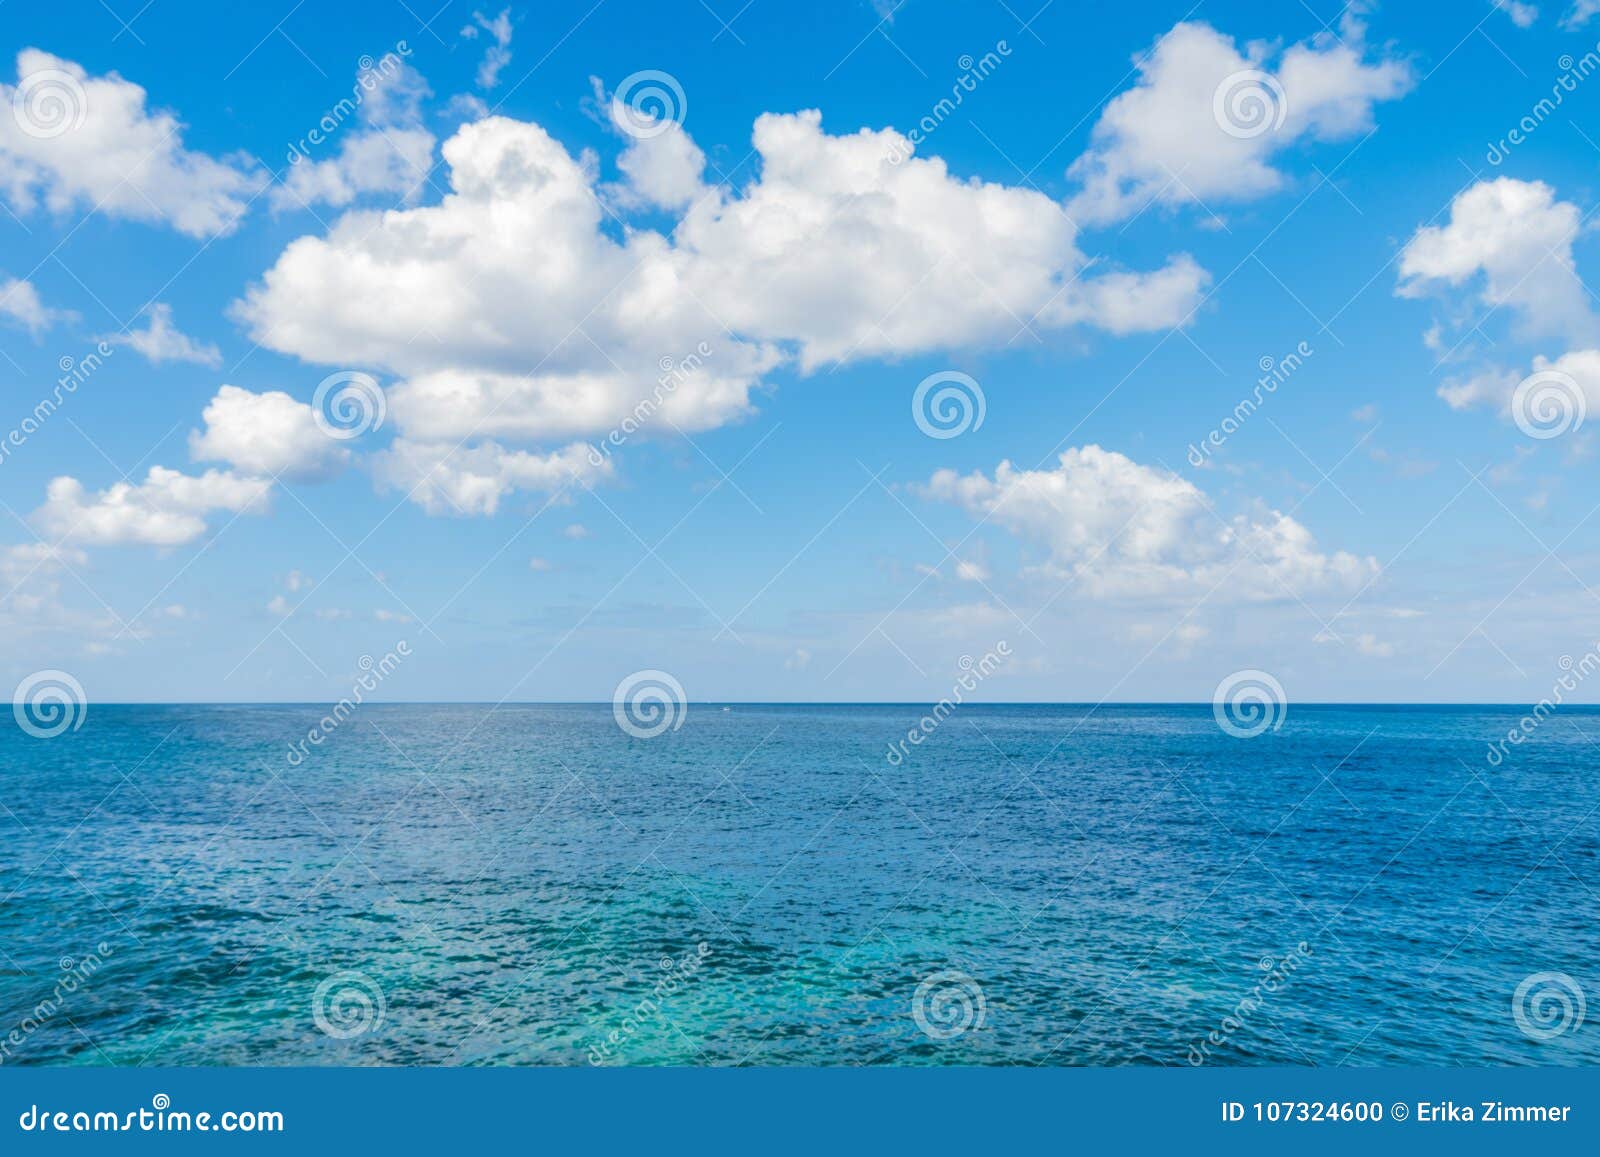 perfect sea horizon in beautiful sunny day in la havana